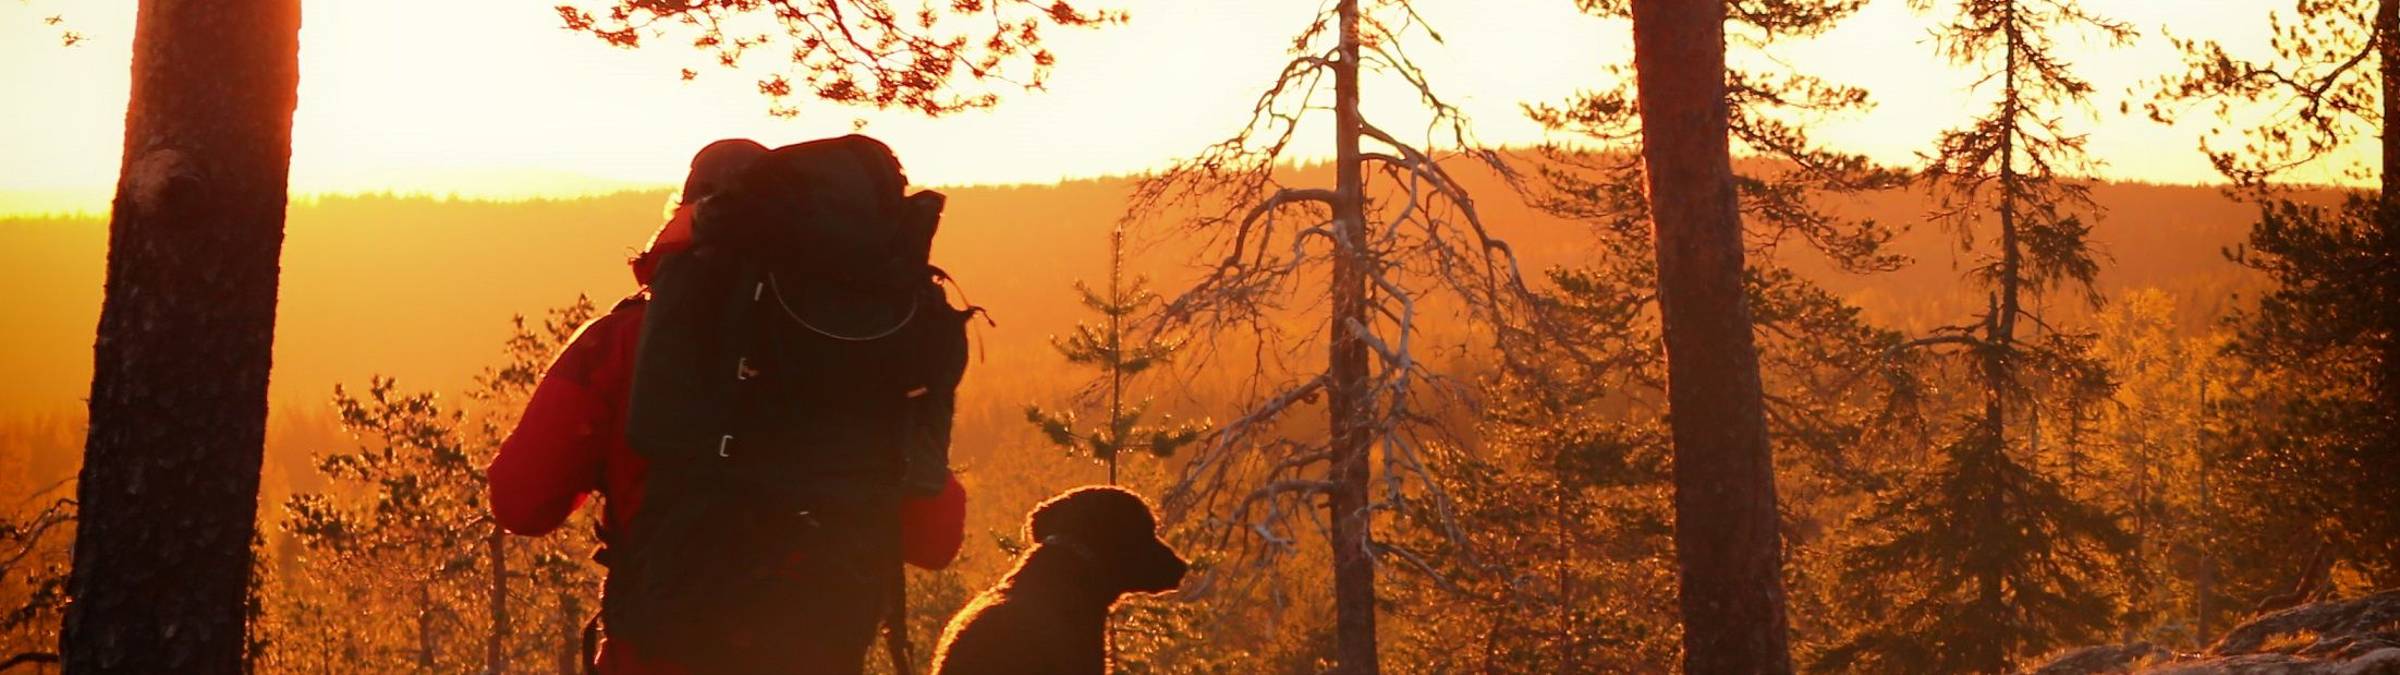 Hiking - Credit Harri Tarvainen and Visit Finland.jpg